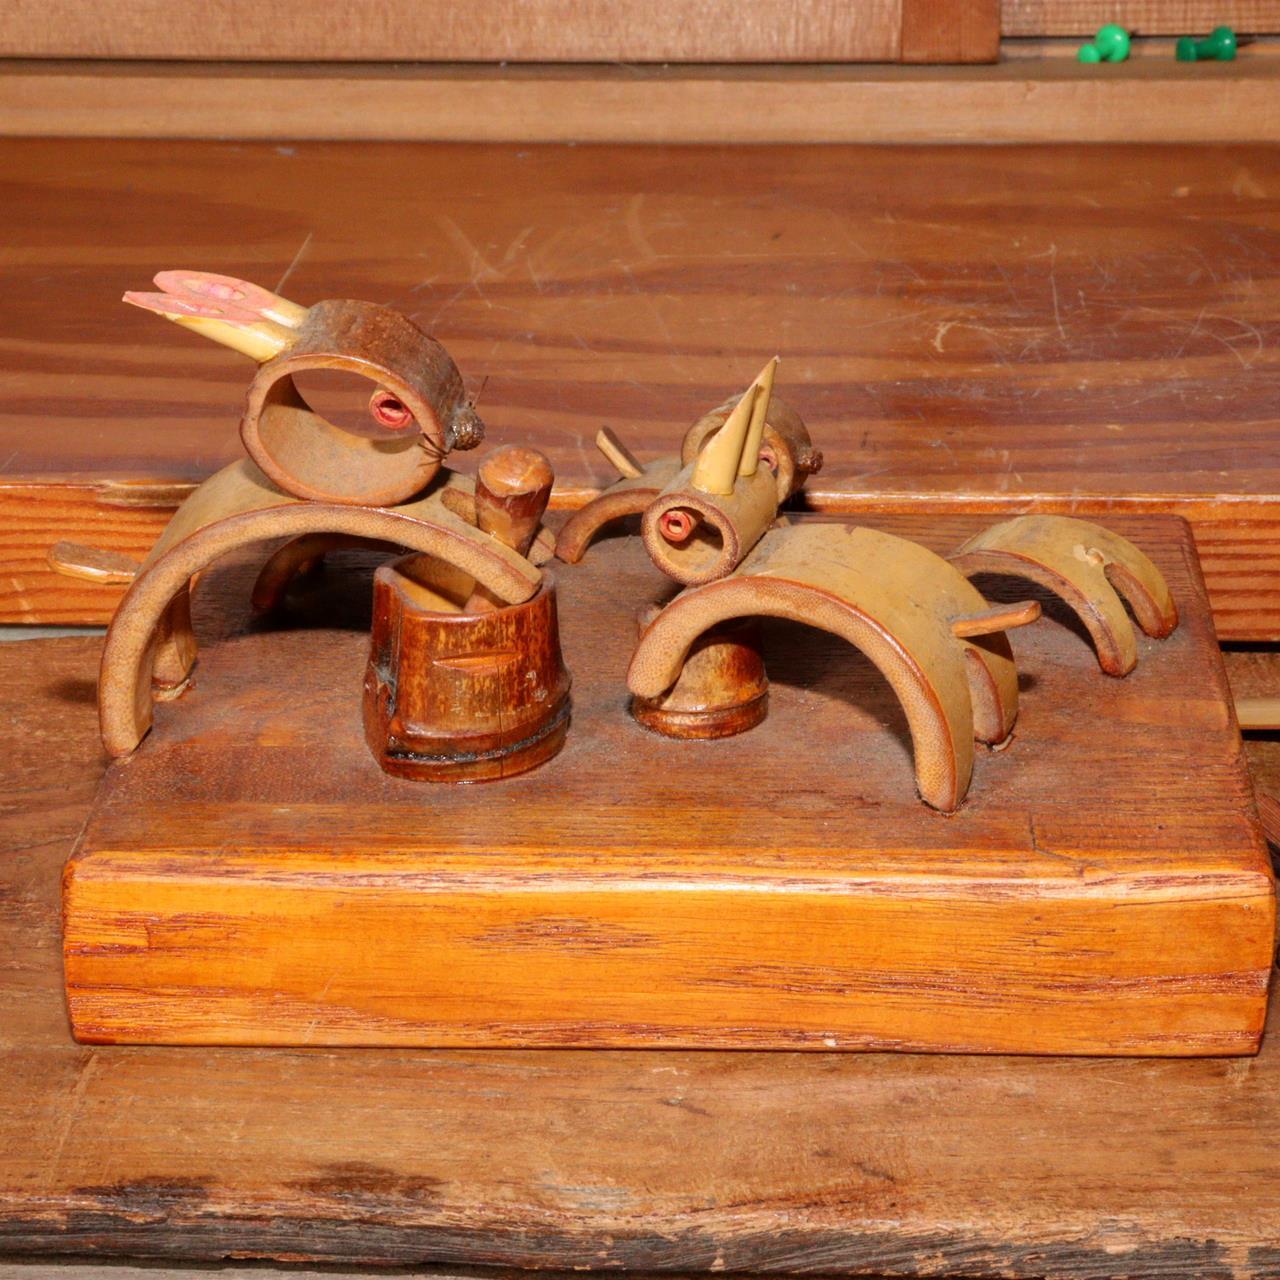 Japanese wooden old folk house Bamboo Hanakago folk crafts WO225